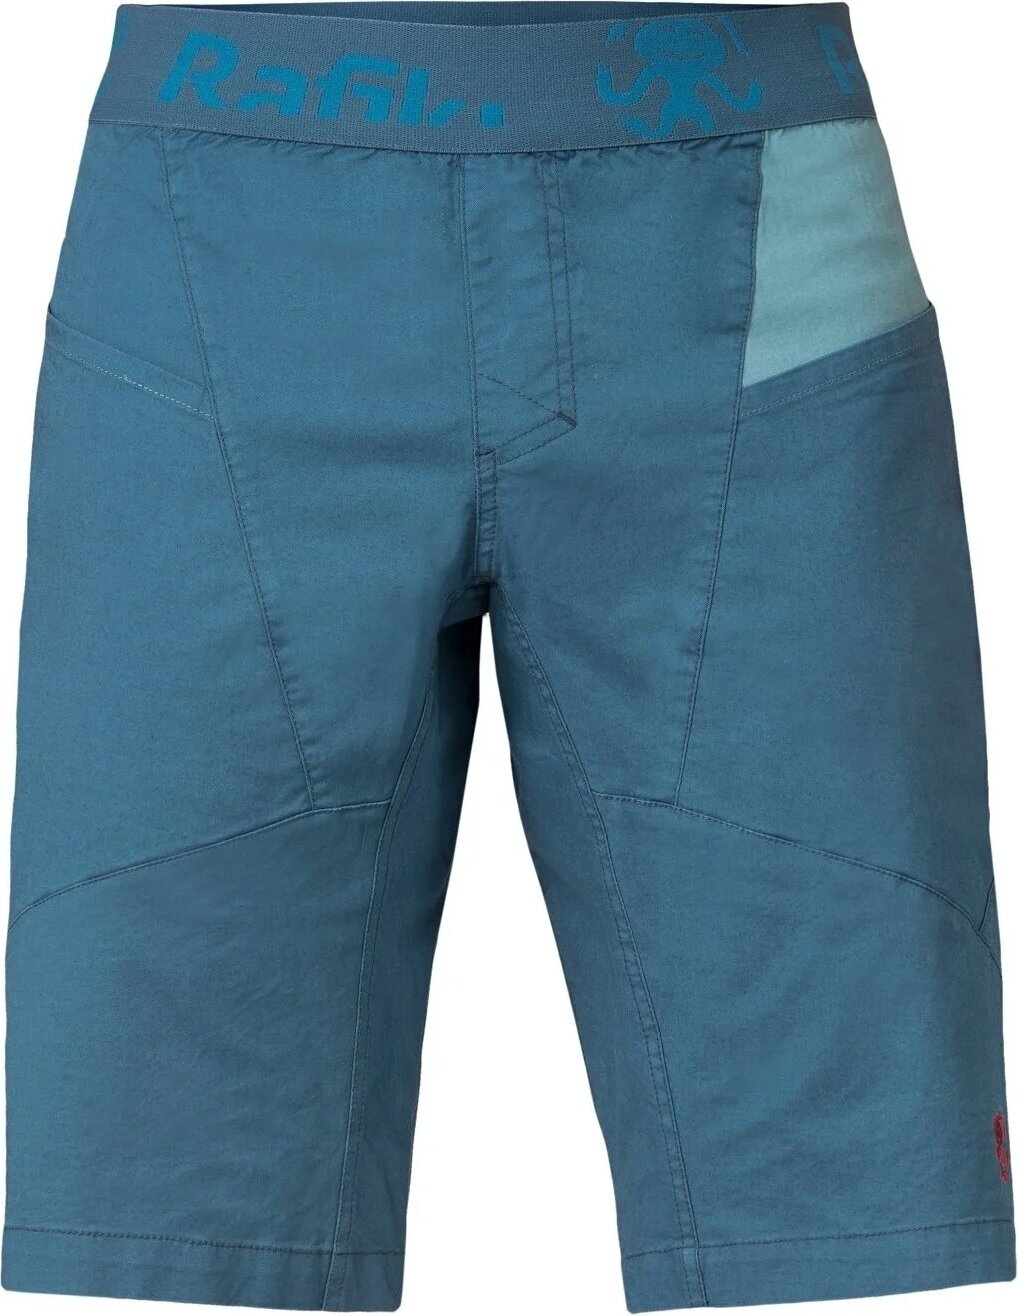 Outdoor Shorts Rafiki Megos Man Shorts Stargazer/Atlantic L Outdoor Shorts